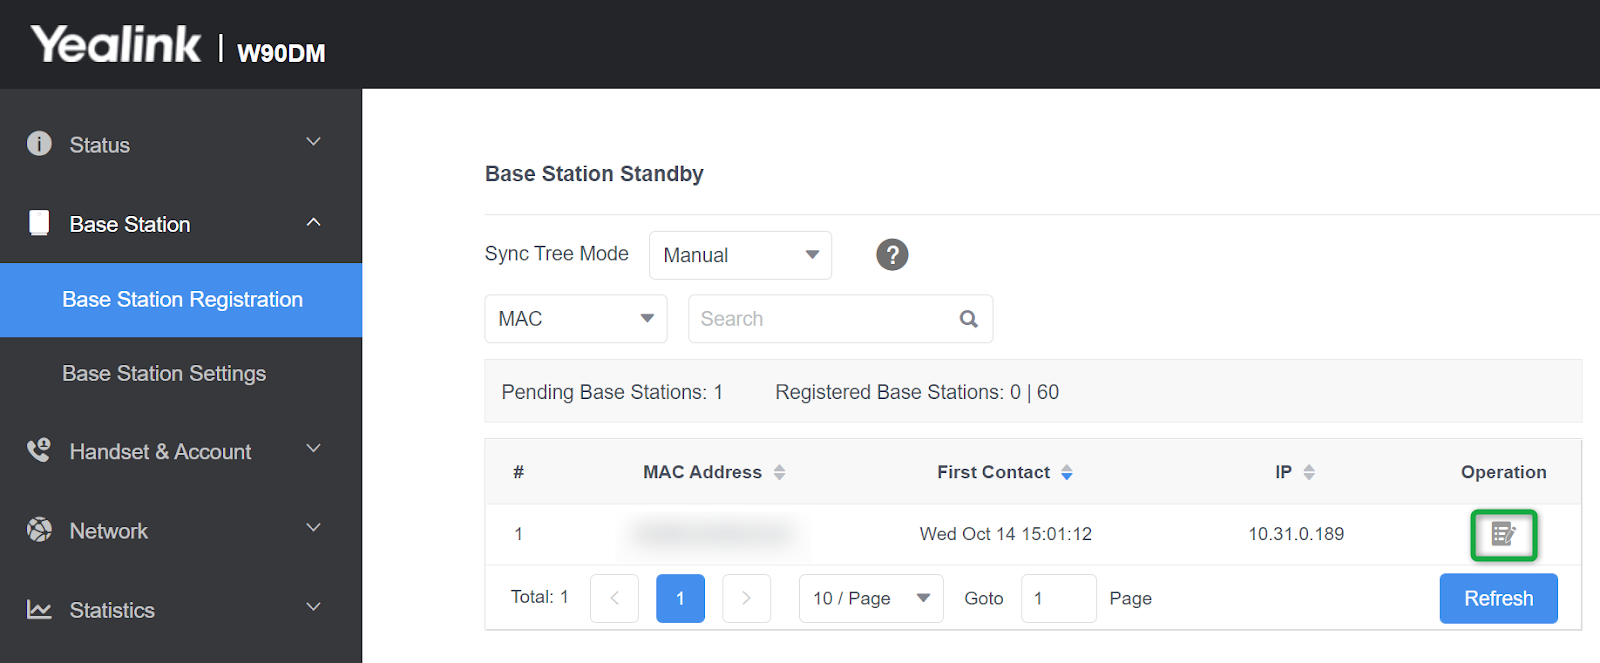 Перейдите в раздел <b>“Base Station Settings”</b> и убедитесь, что статус базы “Active and synced“.